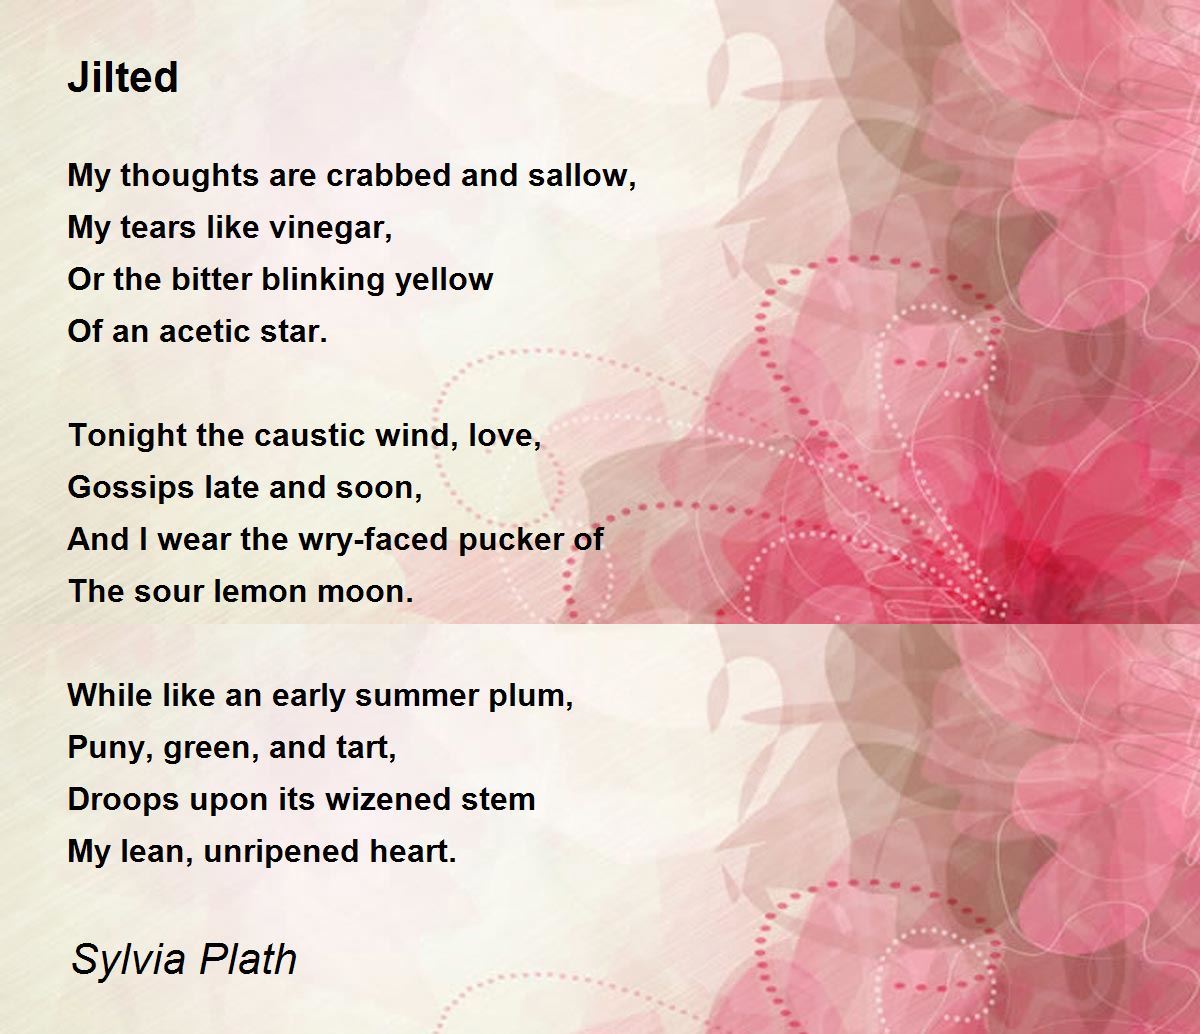 Sylvia Plath: Biography